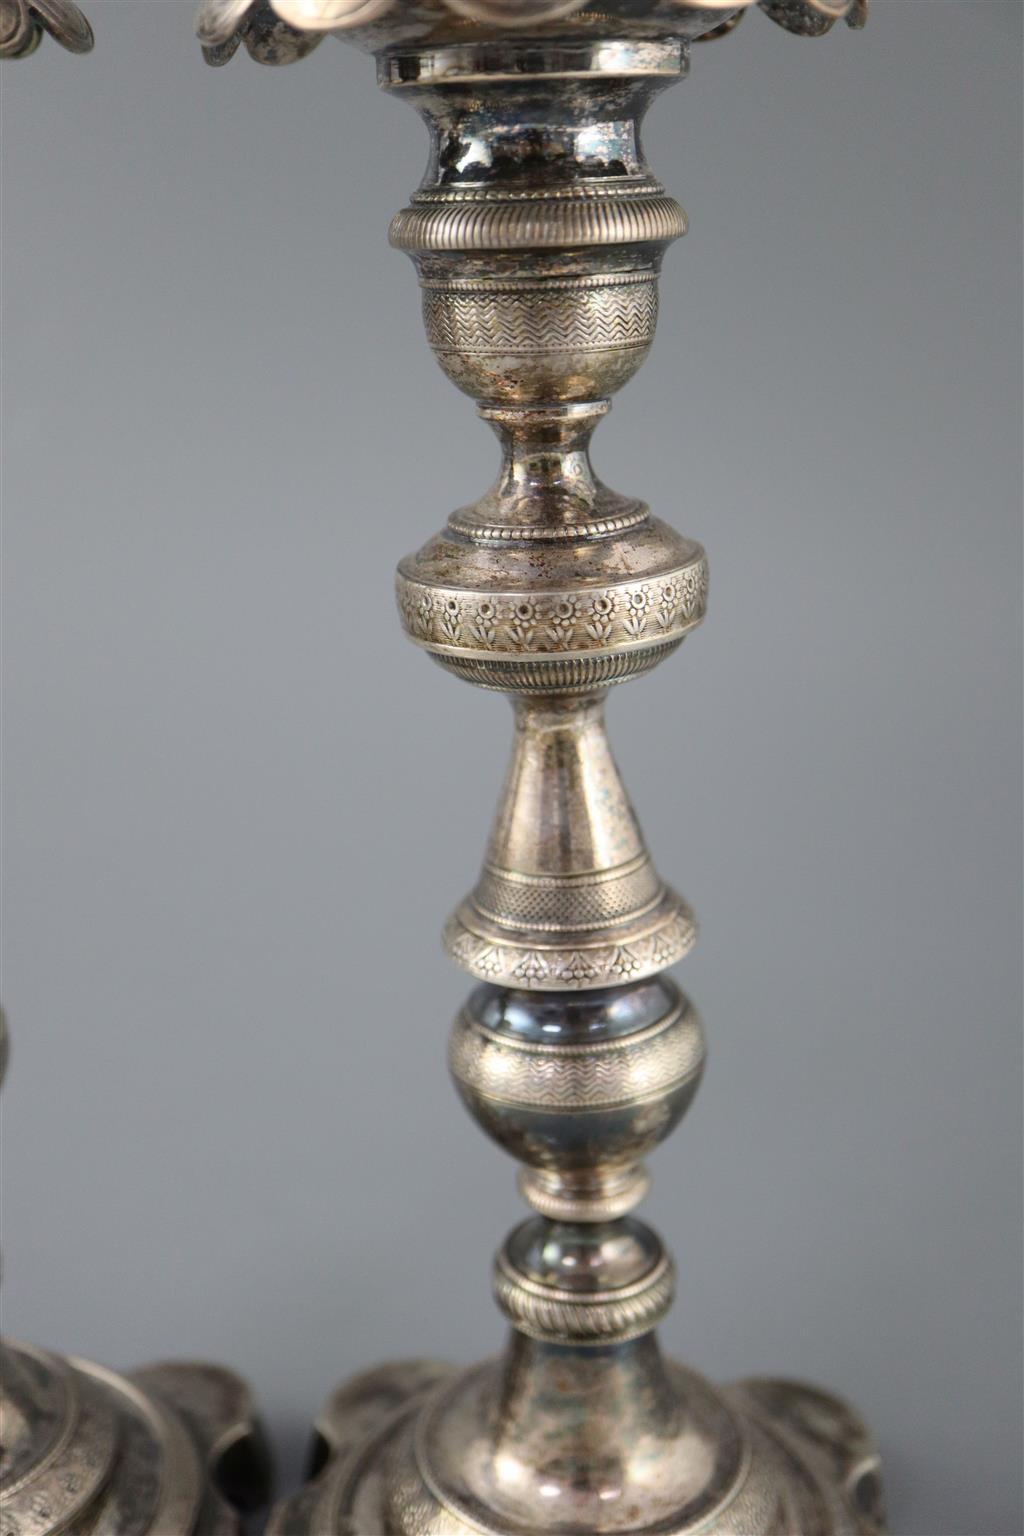 Two 19th century Brazilian? cast silver candlesticks,